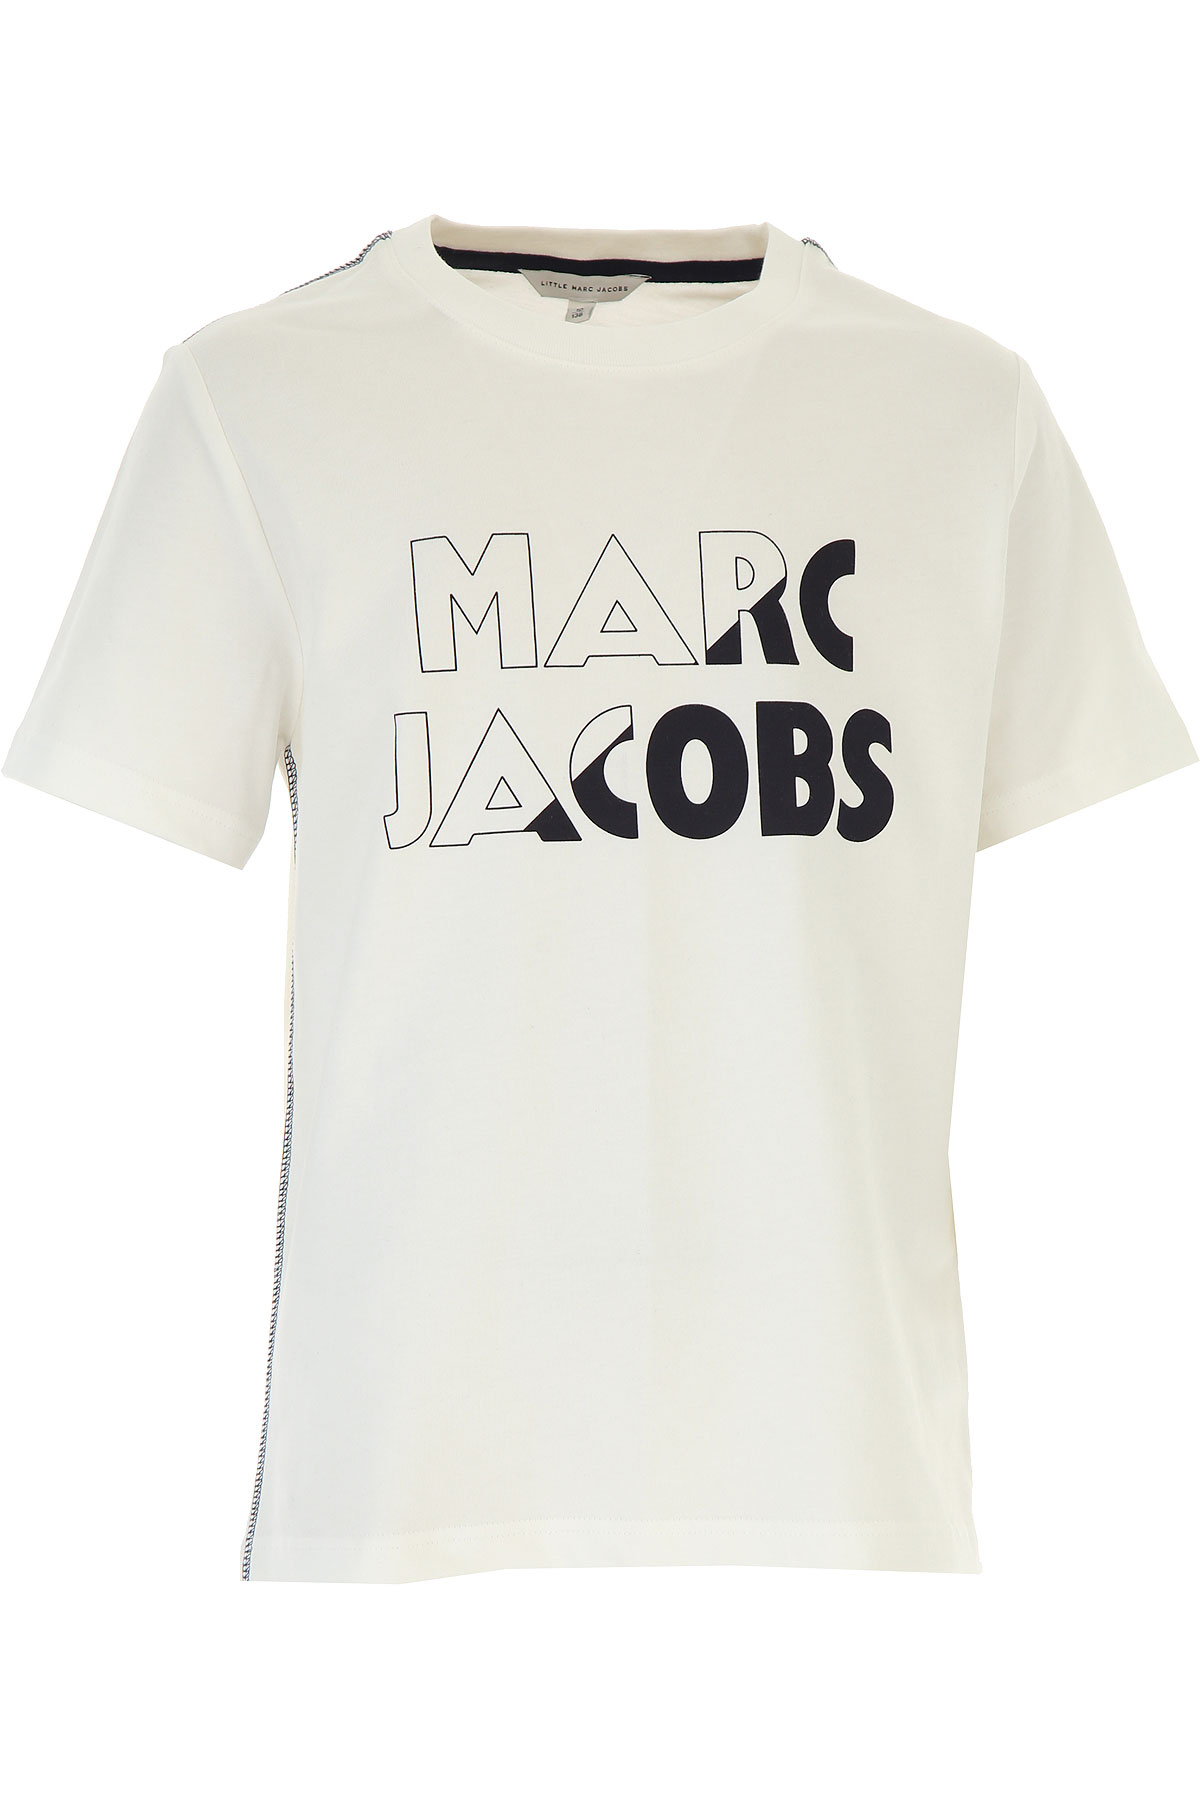 Marc Jacobs Kinder T-Shirt für Jungen Günstig im Sale, Weiss, Baumwolle, 2017, 12Y 2Y 3Y 4Y 6Y 8Y